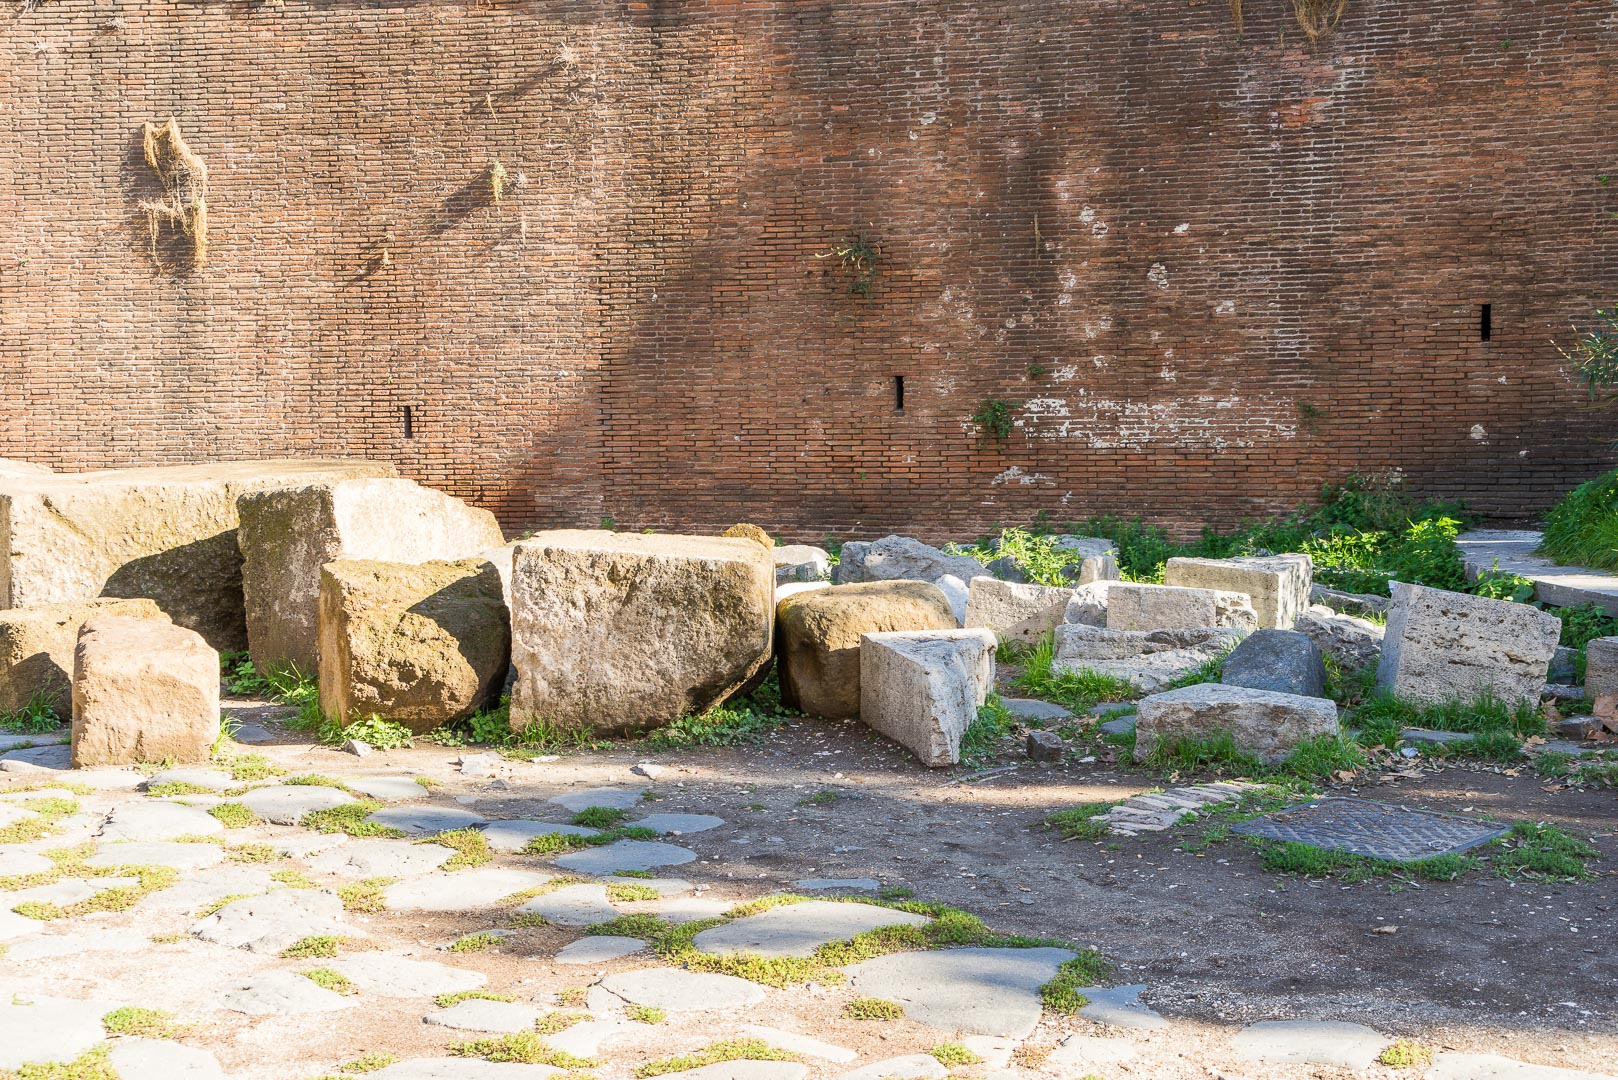 Backplate • ID: 8497 • HDRI Haven - Ruins Of Colosseum